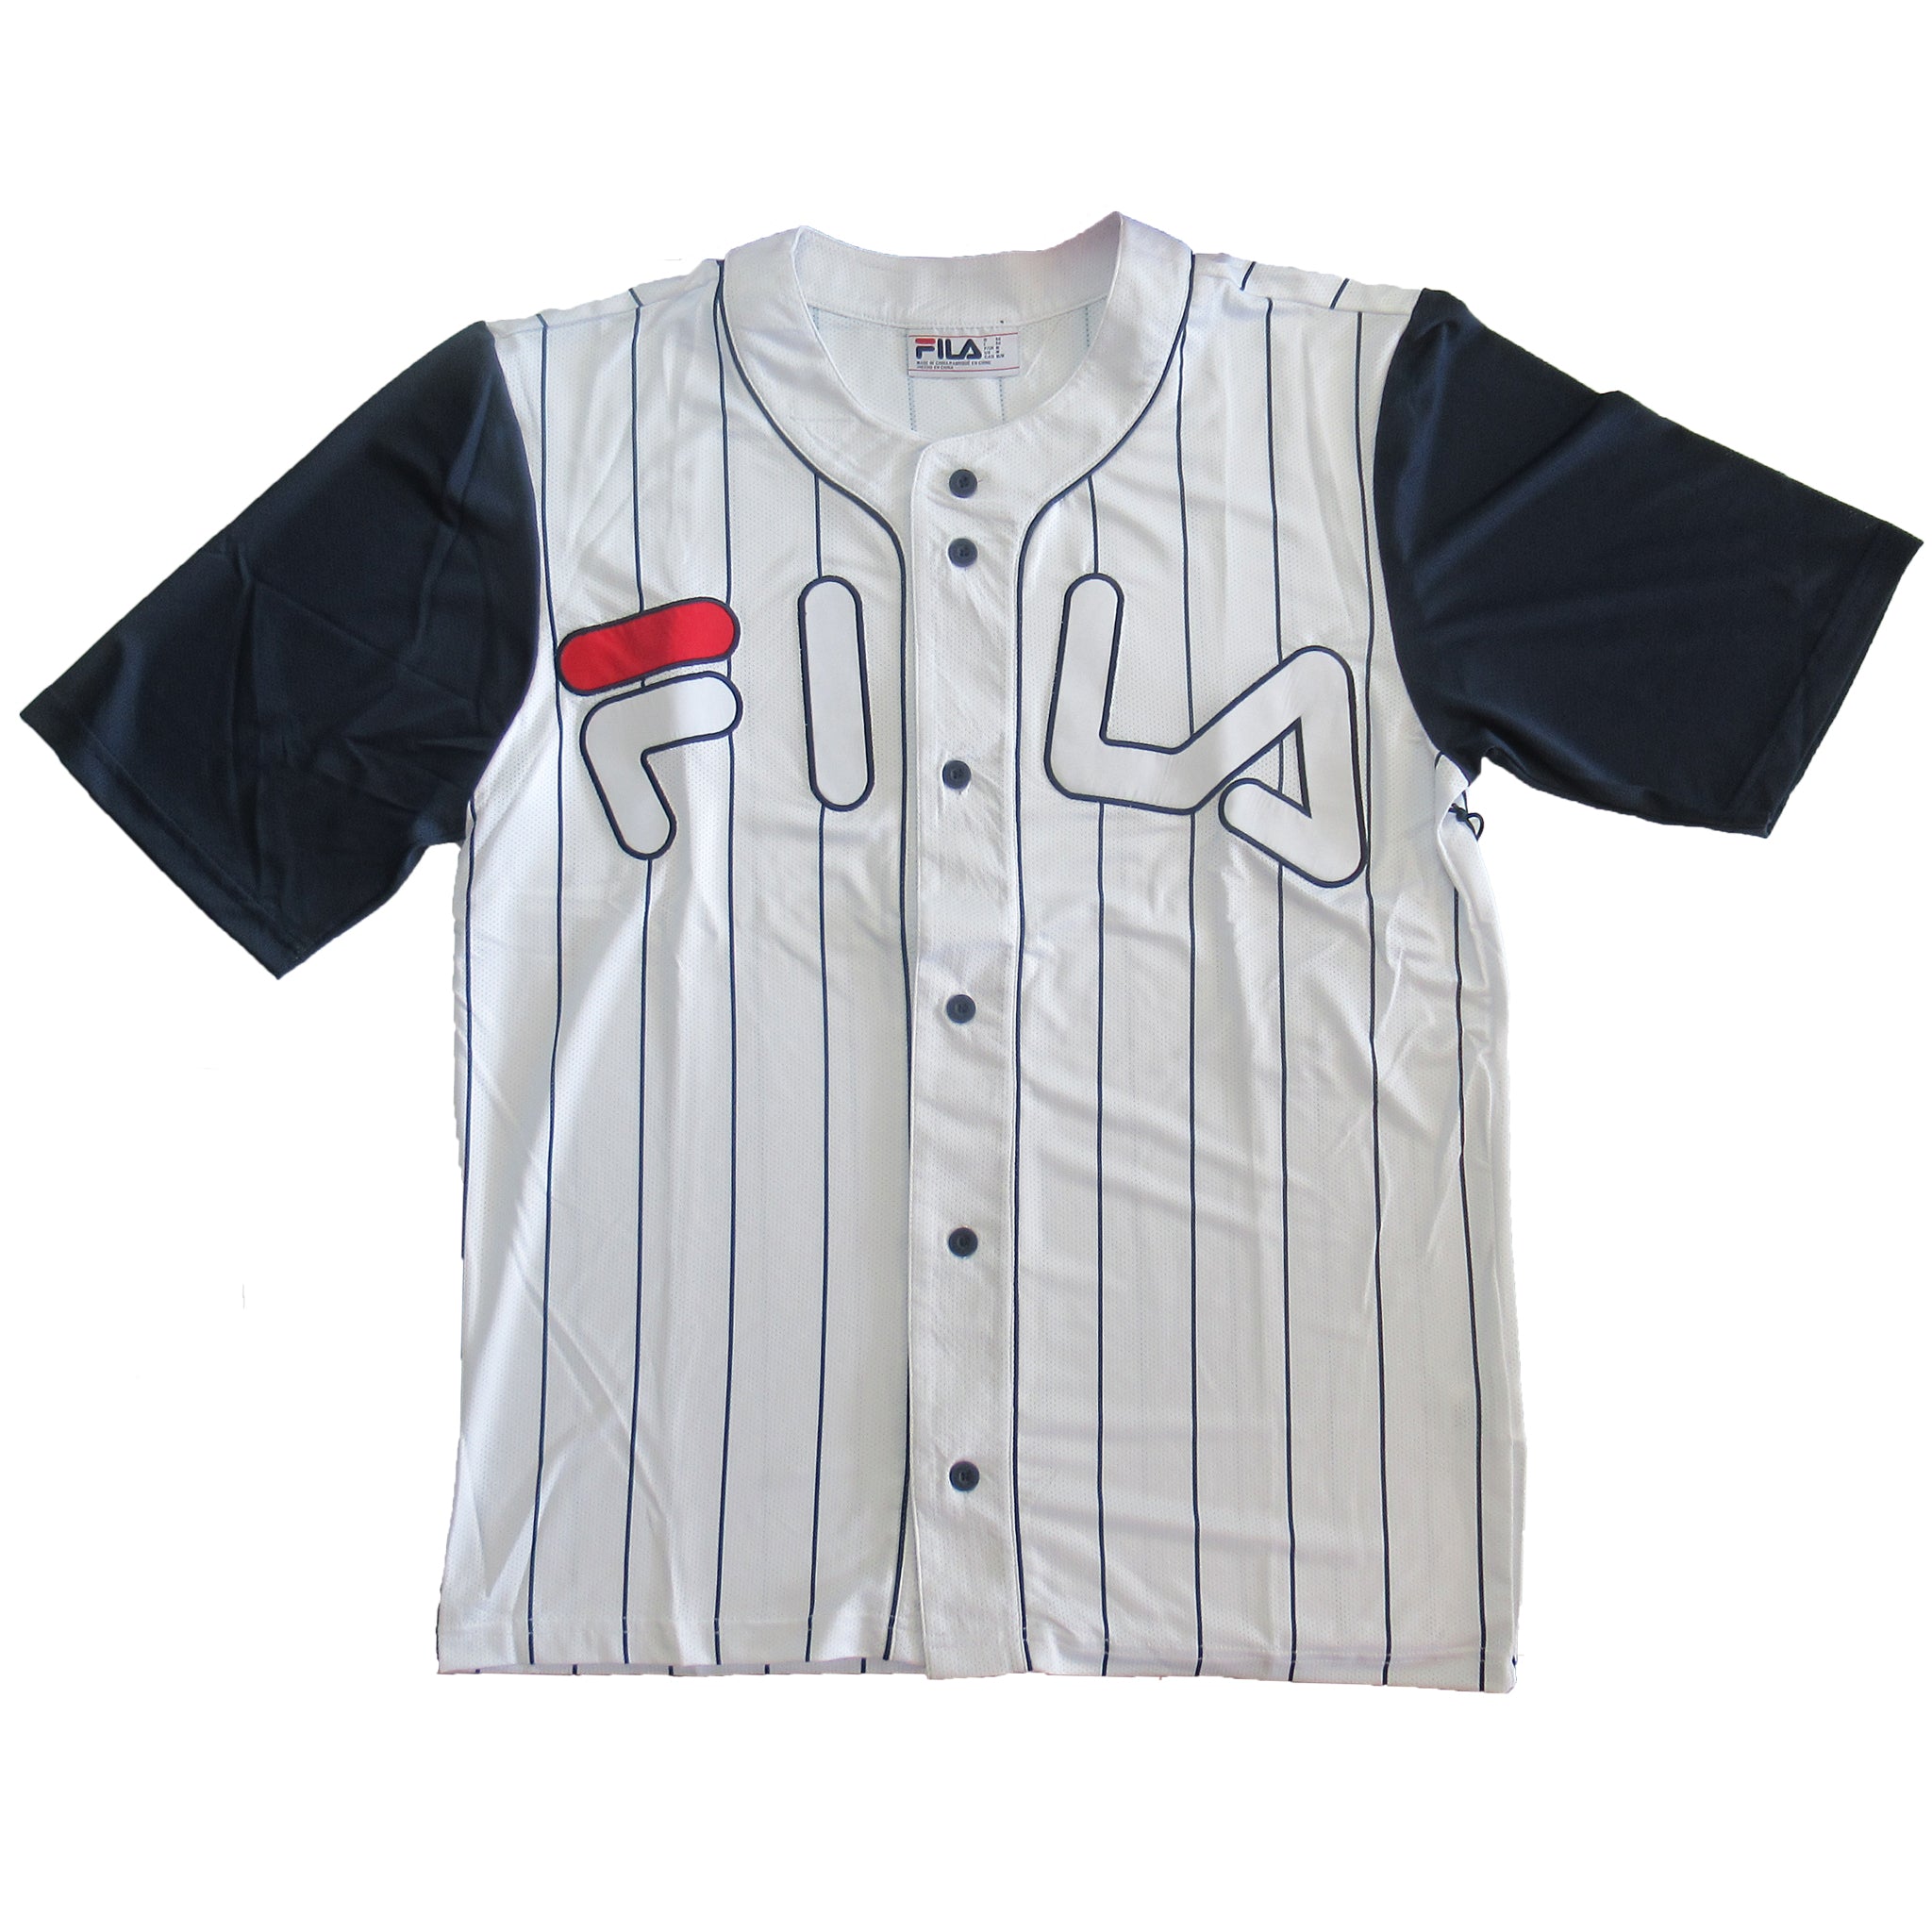 Fila Men's Castro Button Baseball Jersey Short Sleeve LM912843 | eBay